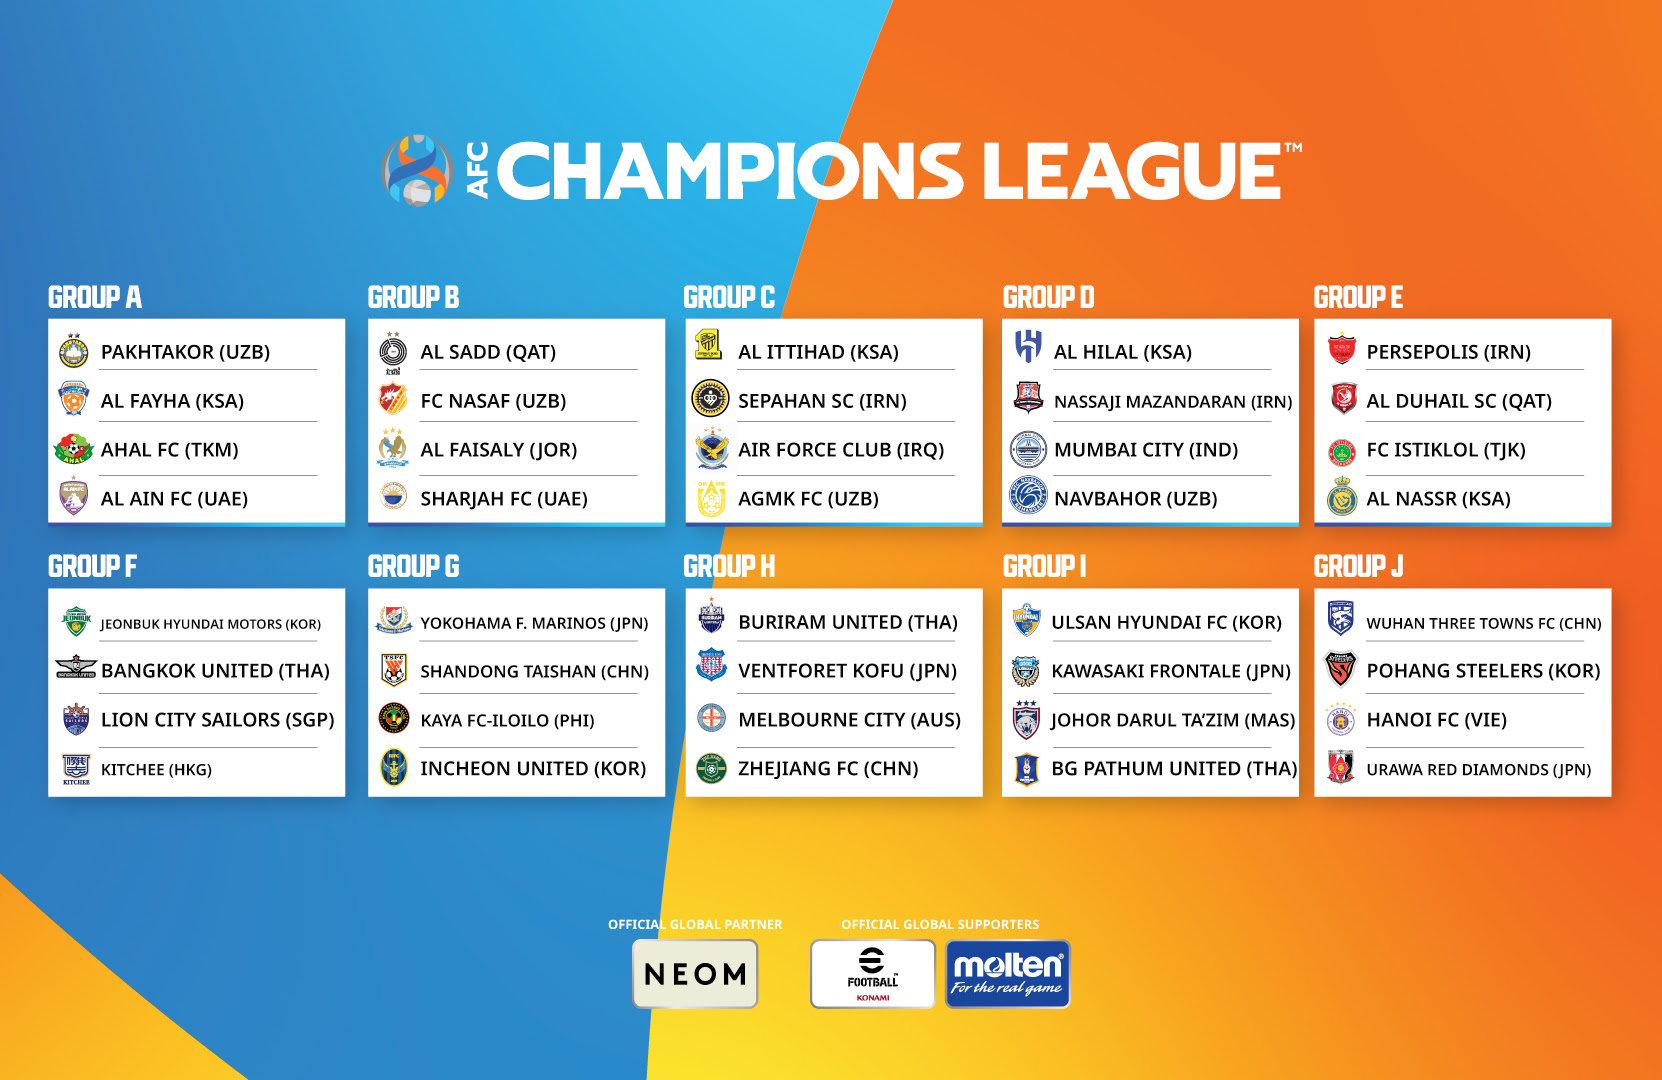 AFC Champions League 2023/24: Mumbai City vs Al Hilal SFC